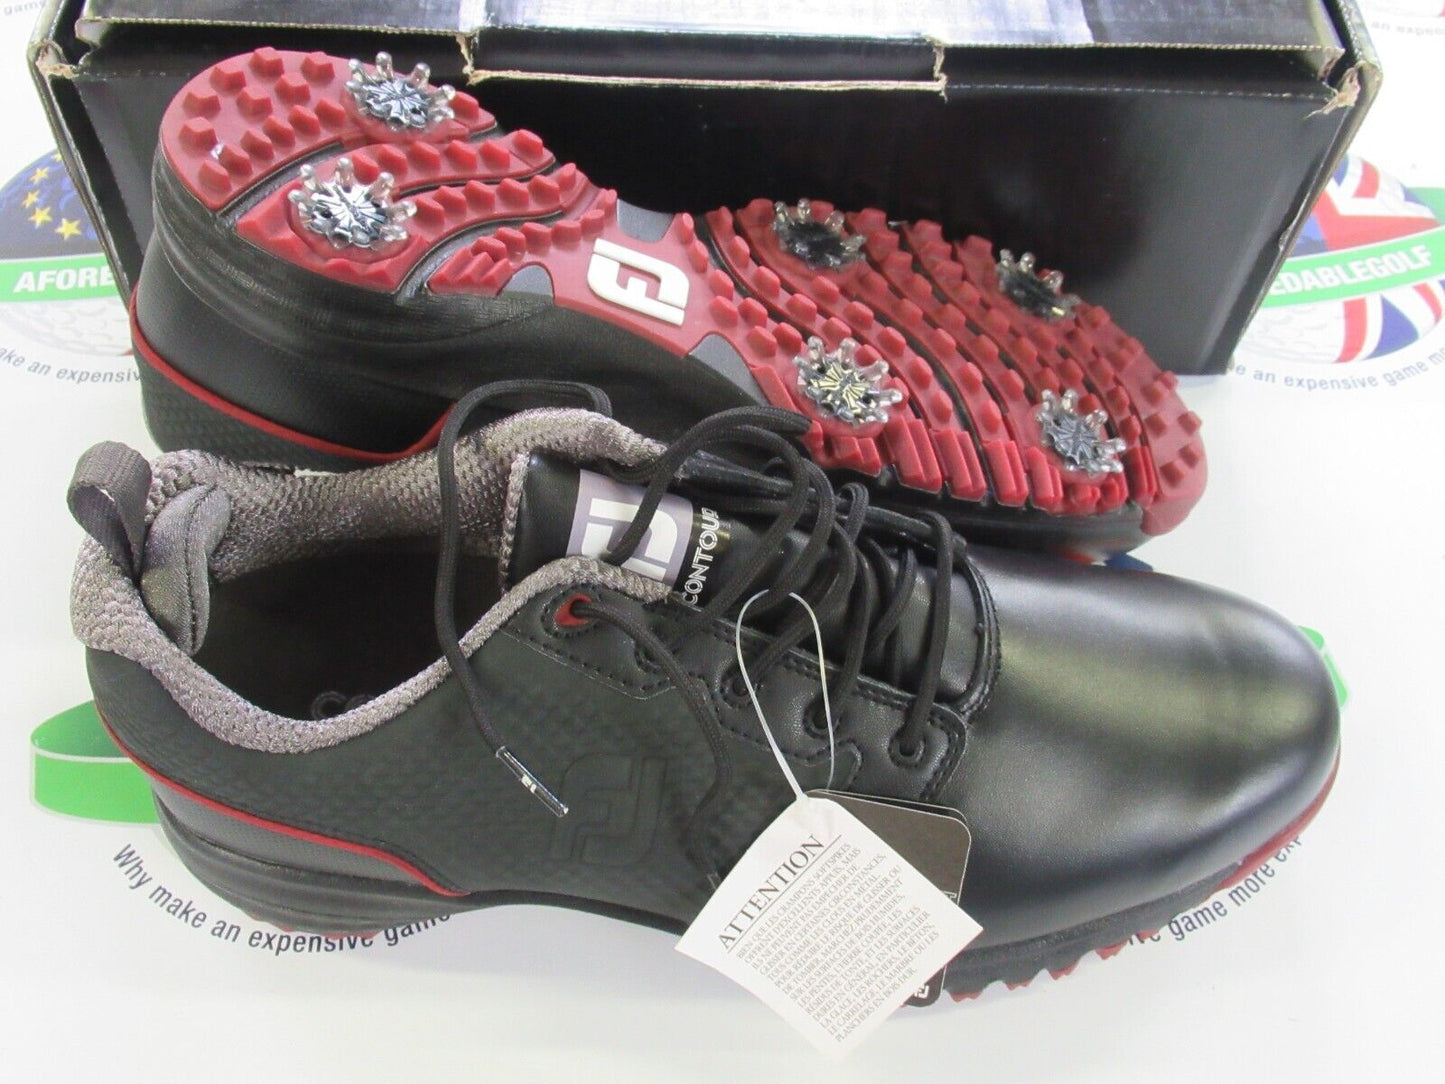 footjoy contour fit golf shoes 54164k black/scarlet uk size 9 medium